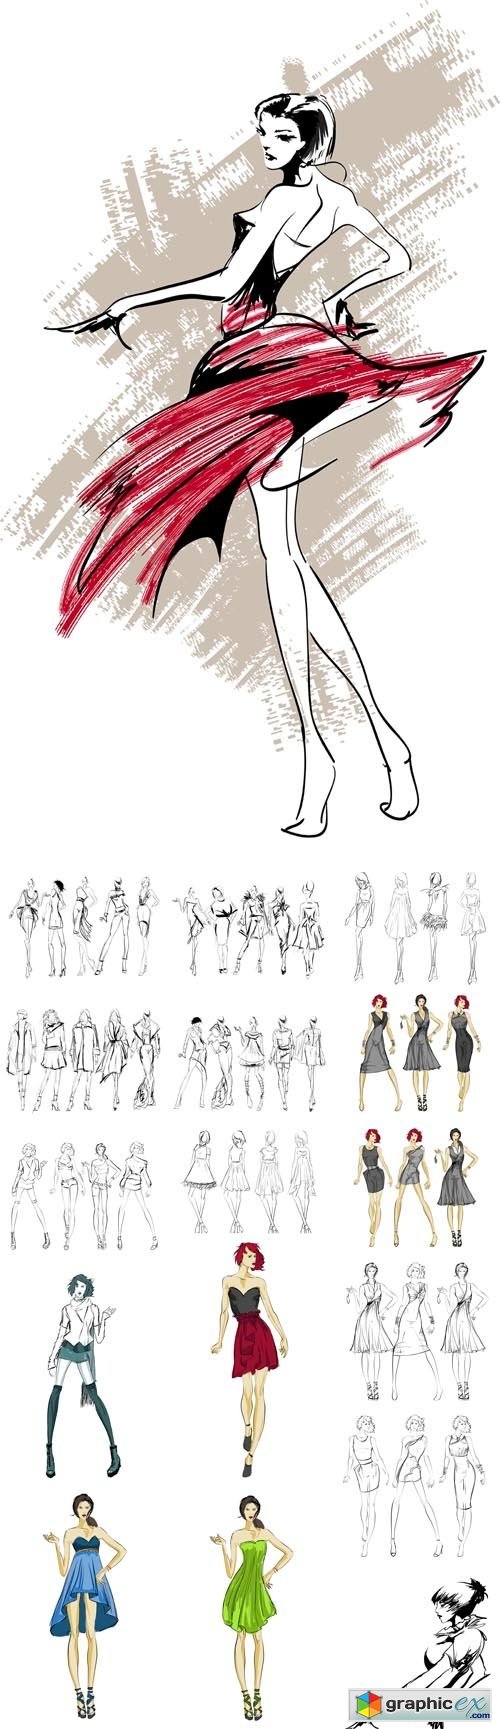 Sketch.Fashion Girls on a White Background